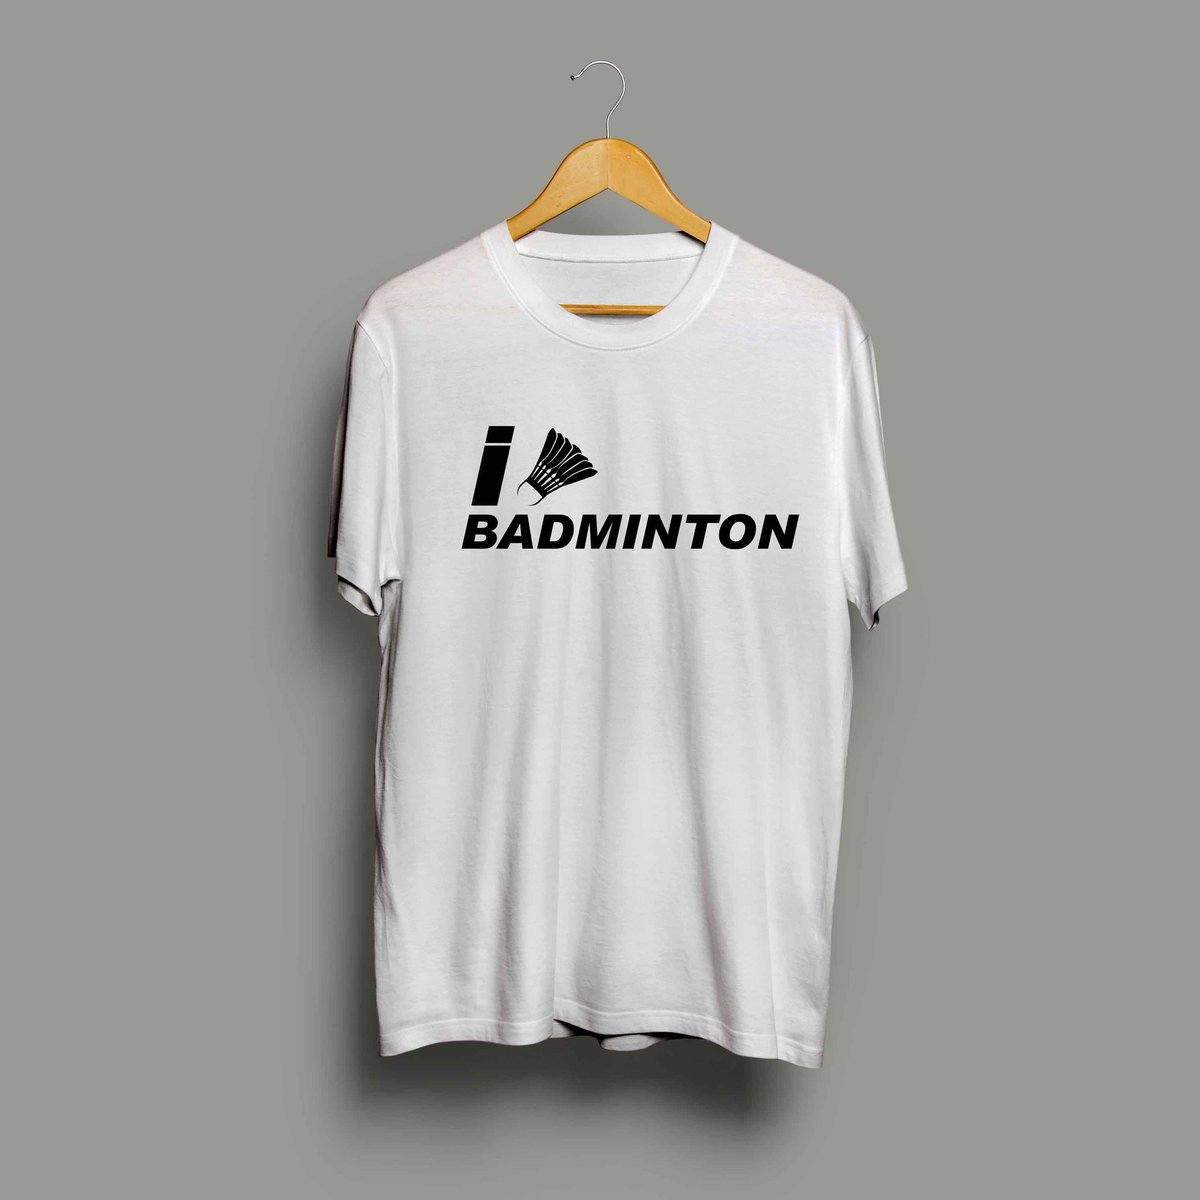 Membuat Kaos Badminton untuk Atlet yang Akan Bertanding